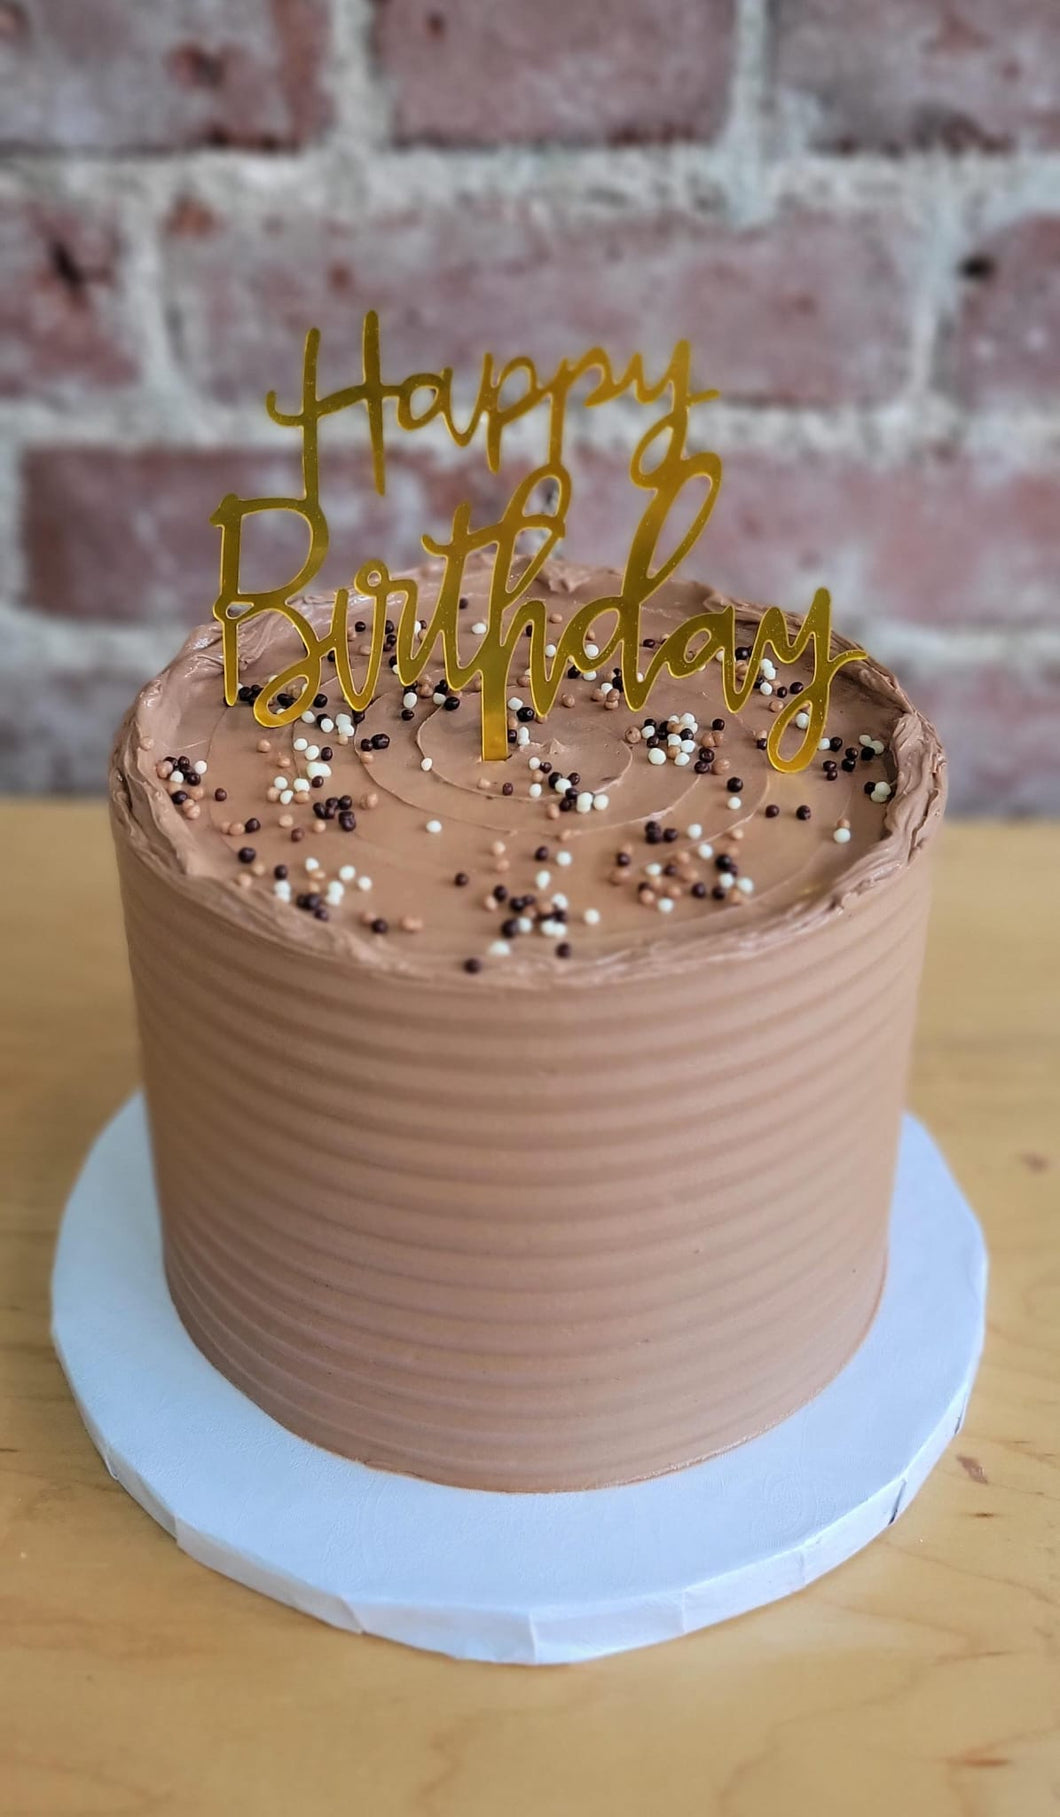 Chocolate Buttercream with Chocolate Sprinkles Cake :)